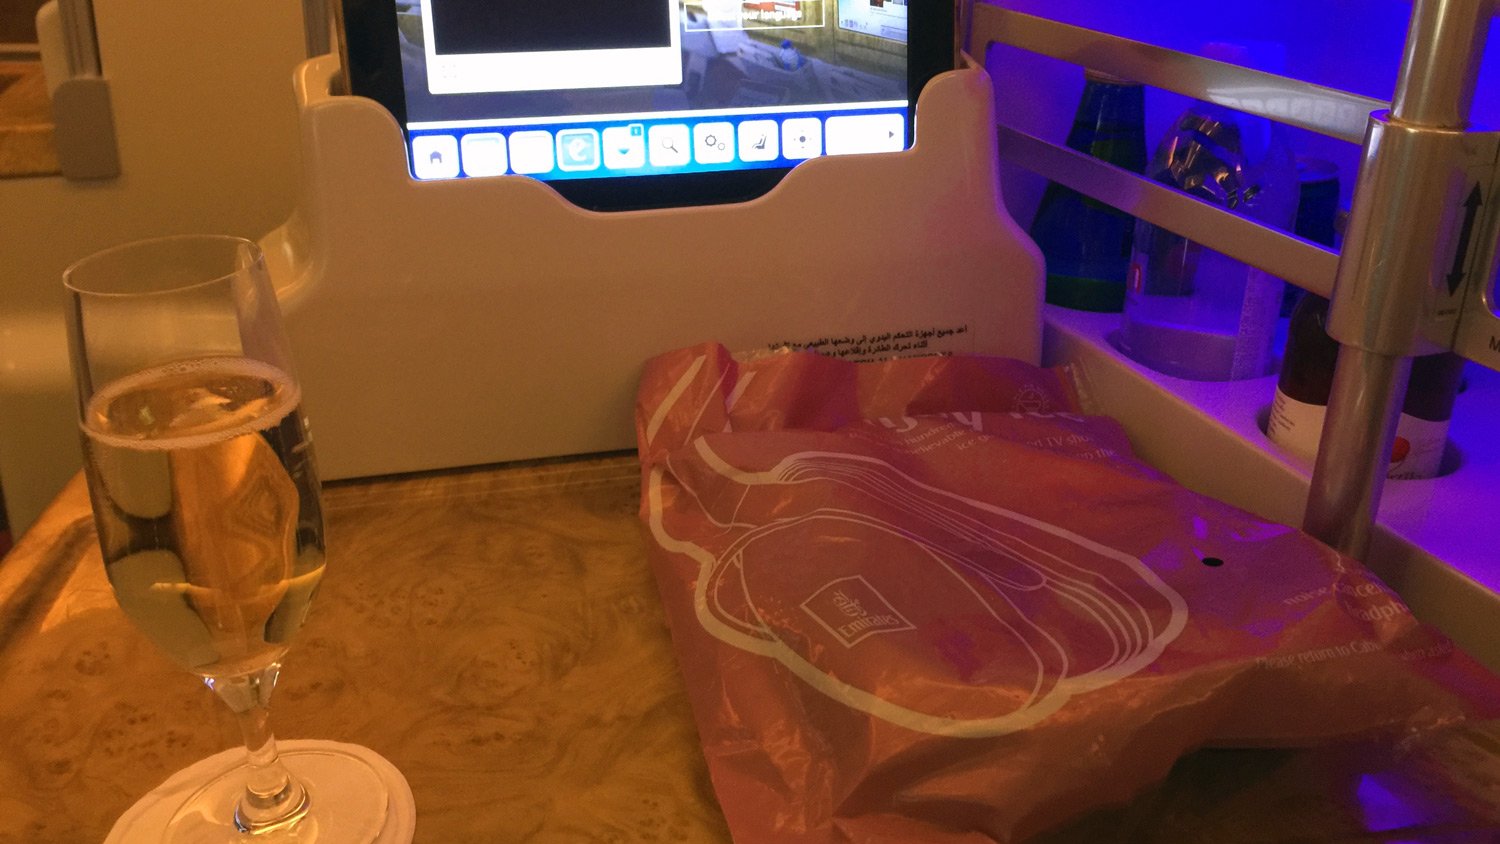 a plastic bag on a table